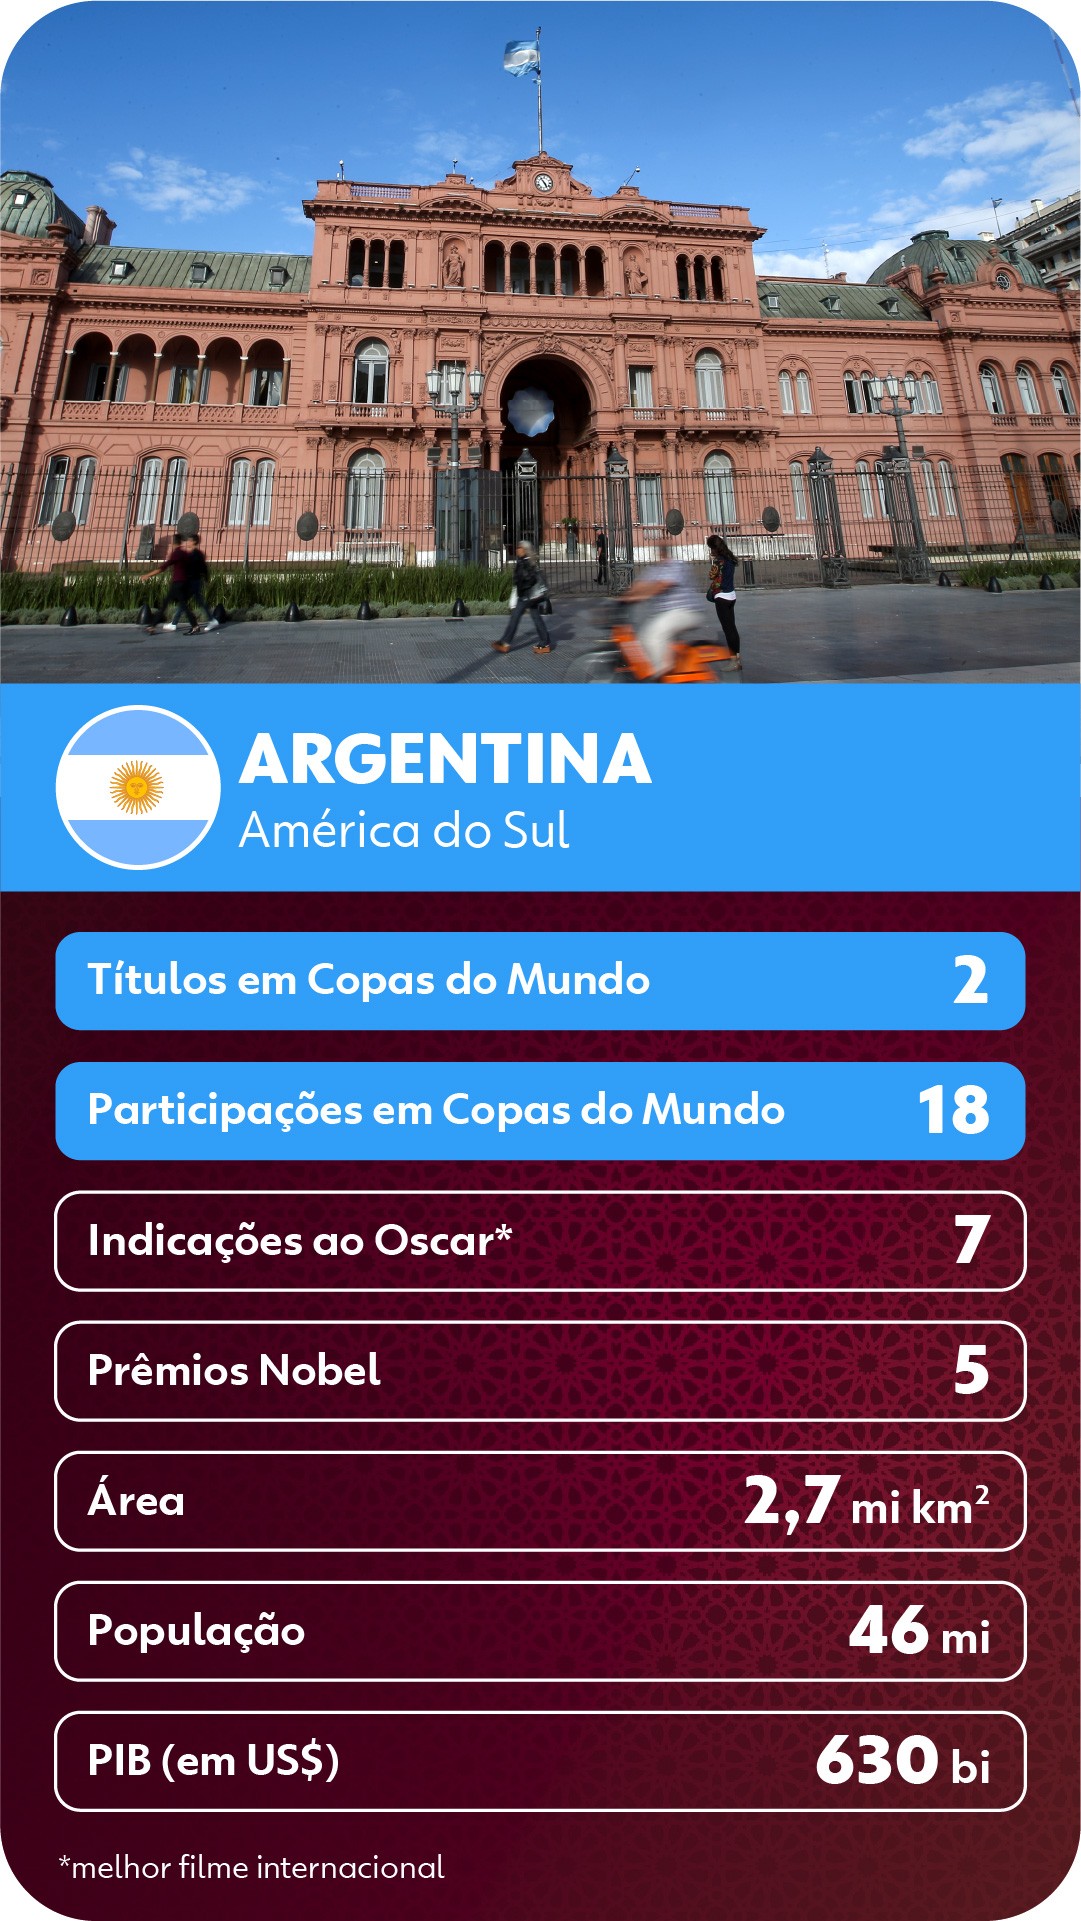 Inspirados no 'Super Trunfo', cards comparam características dos países finalistas da Copa